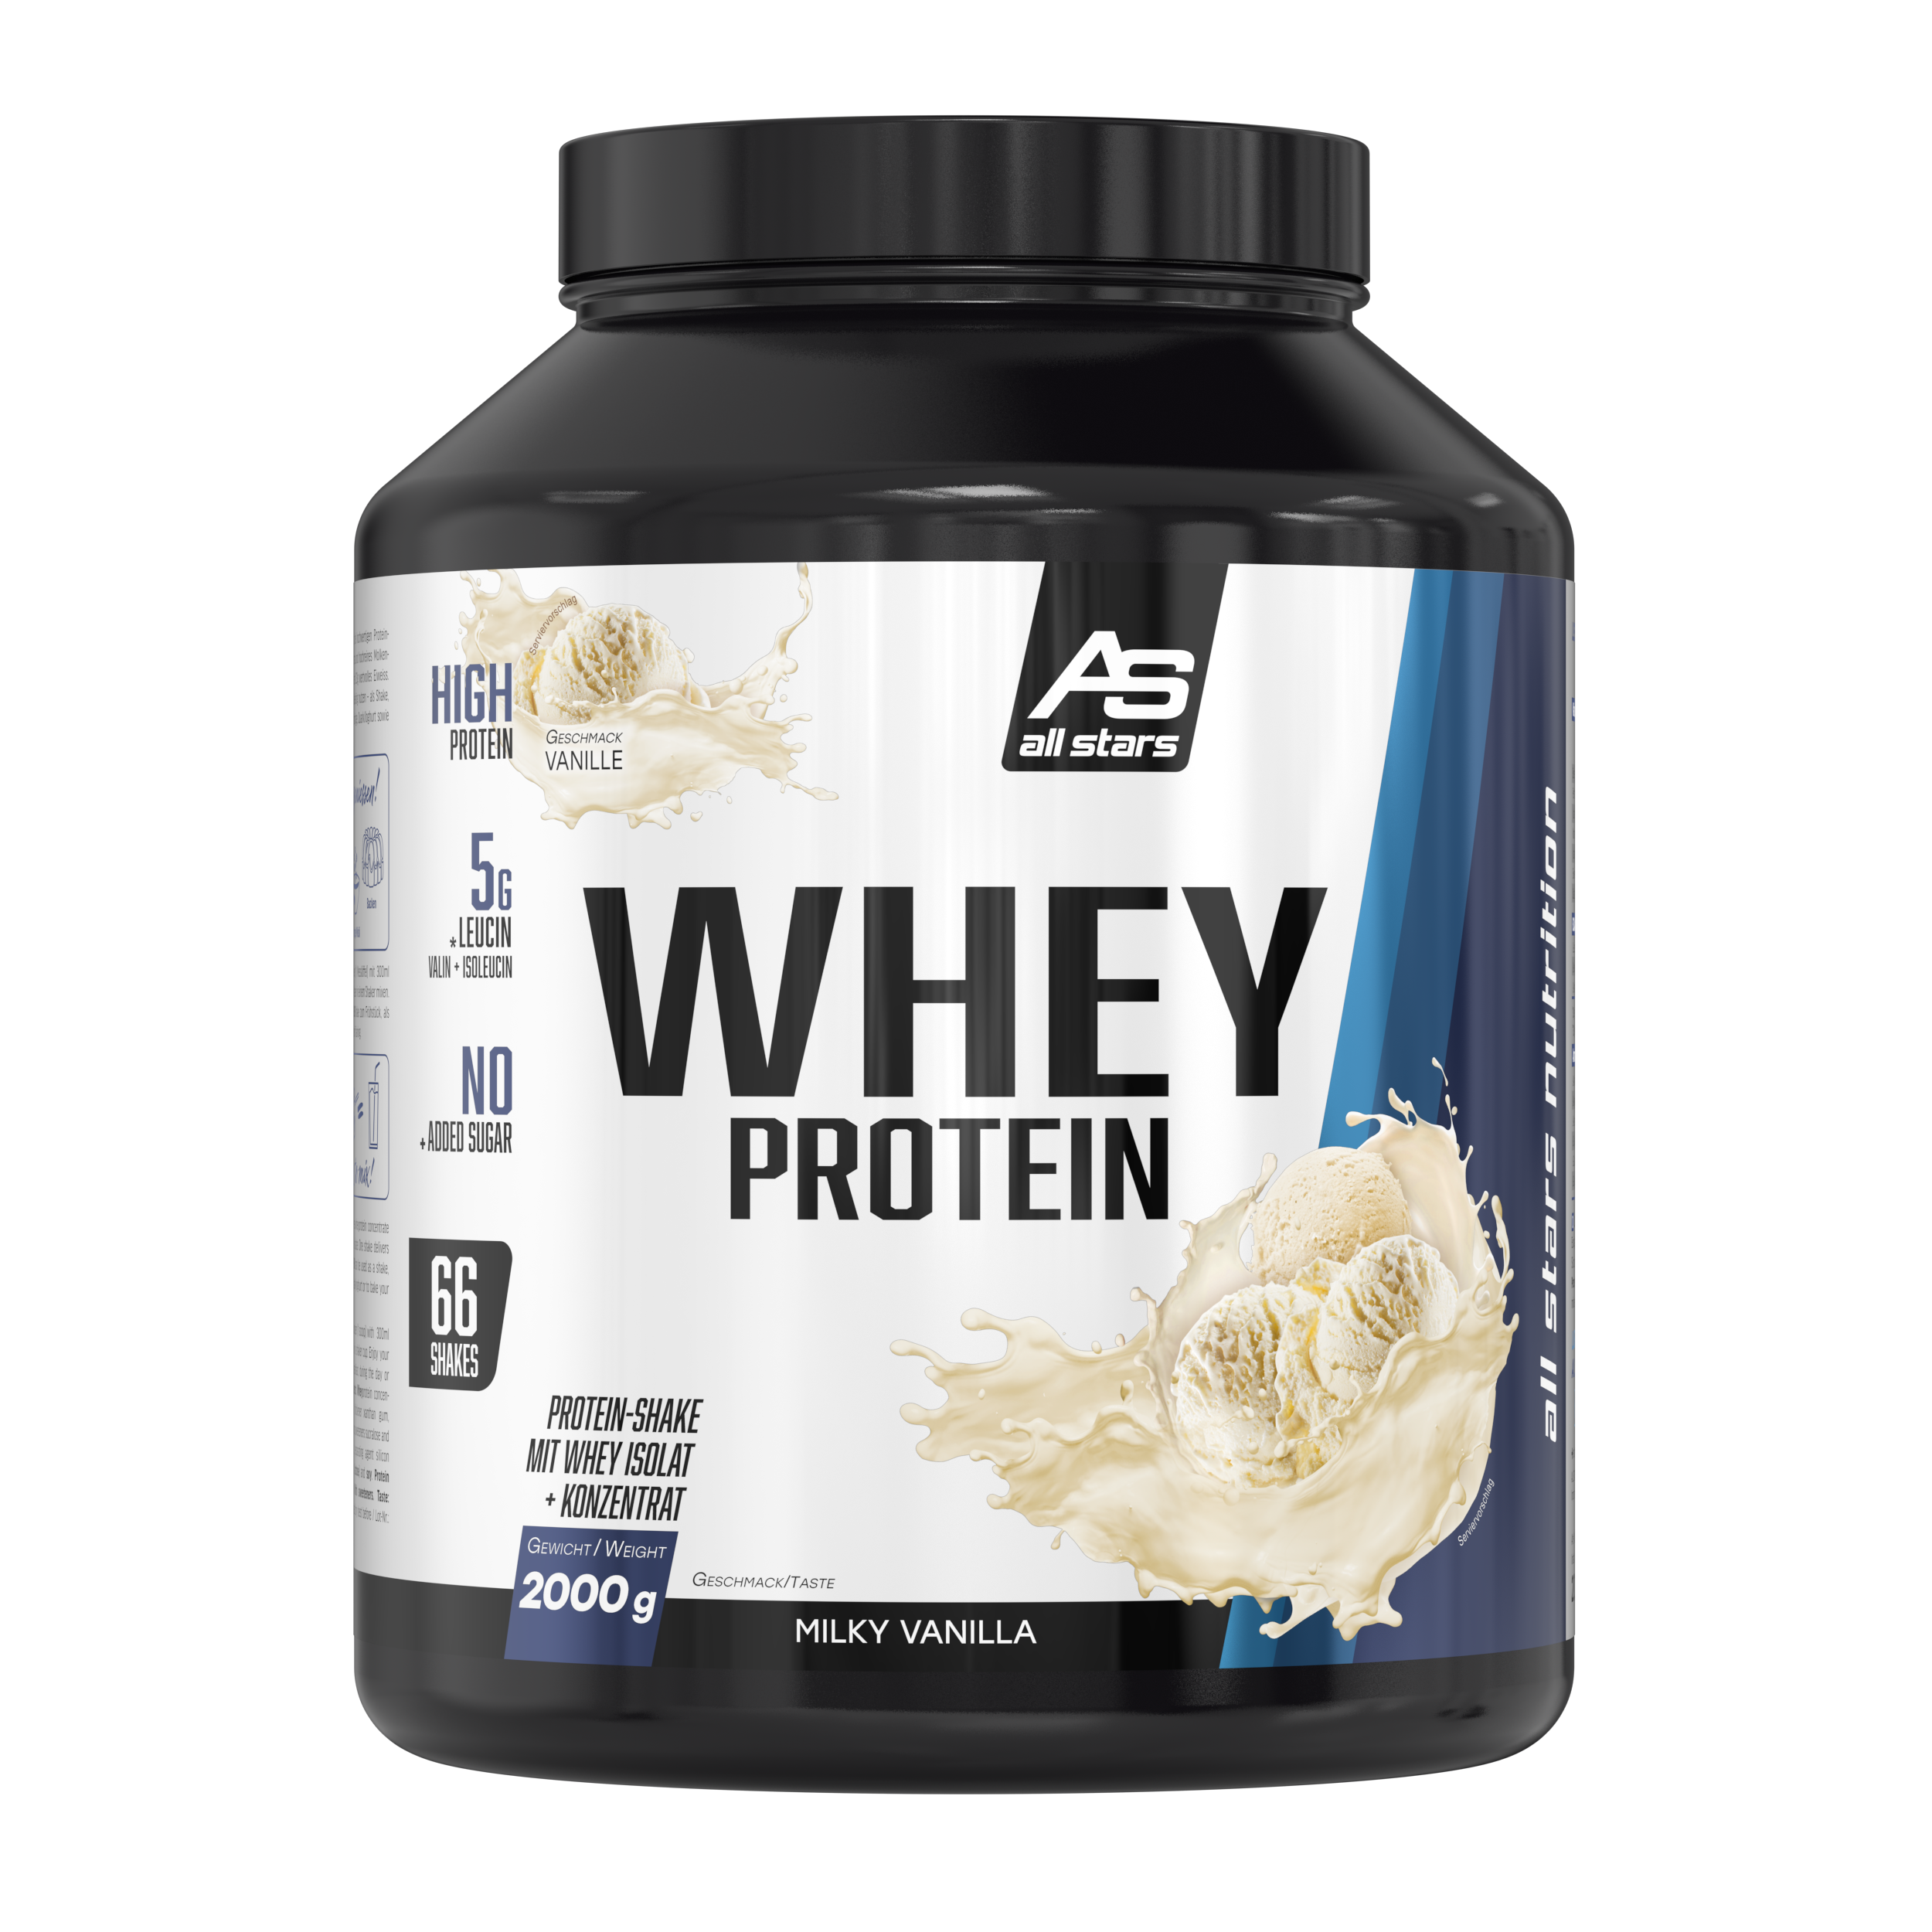 All Stars Whey Protein - premium whey